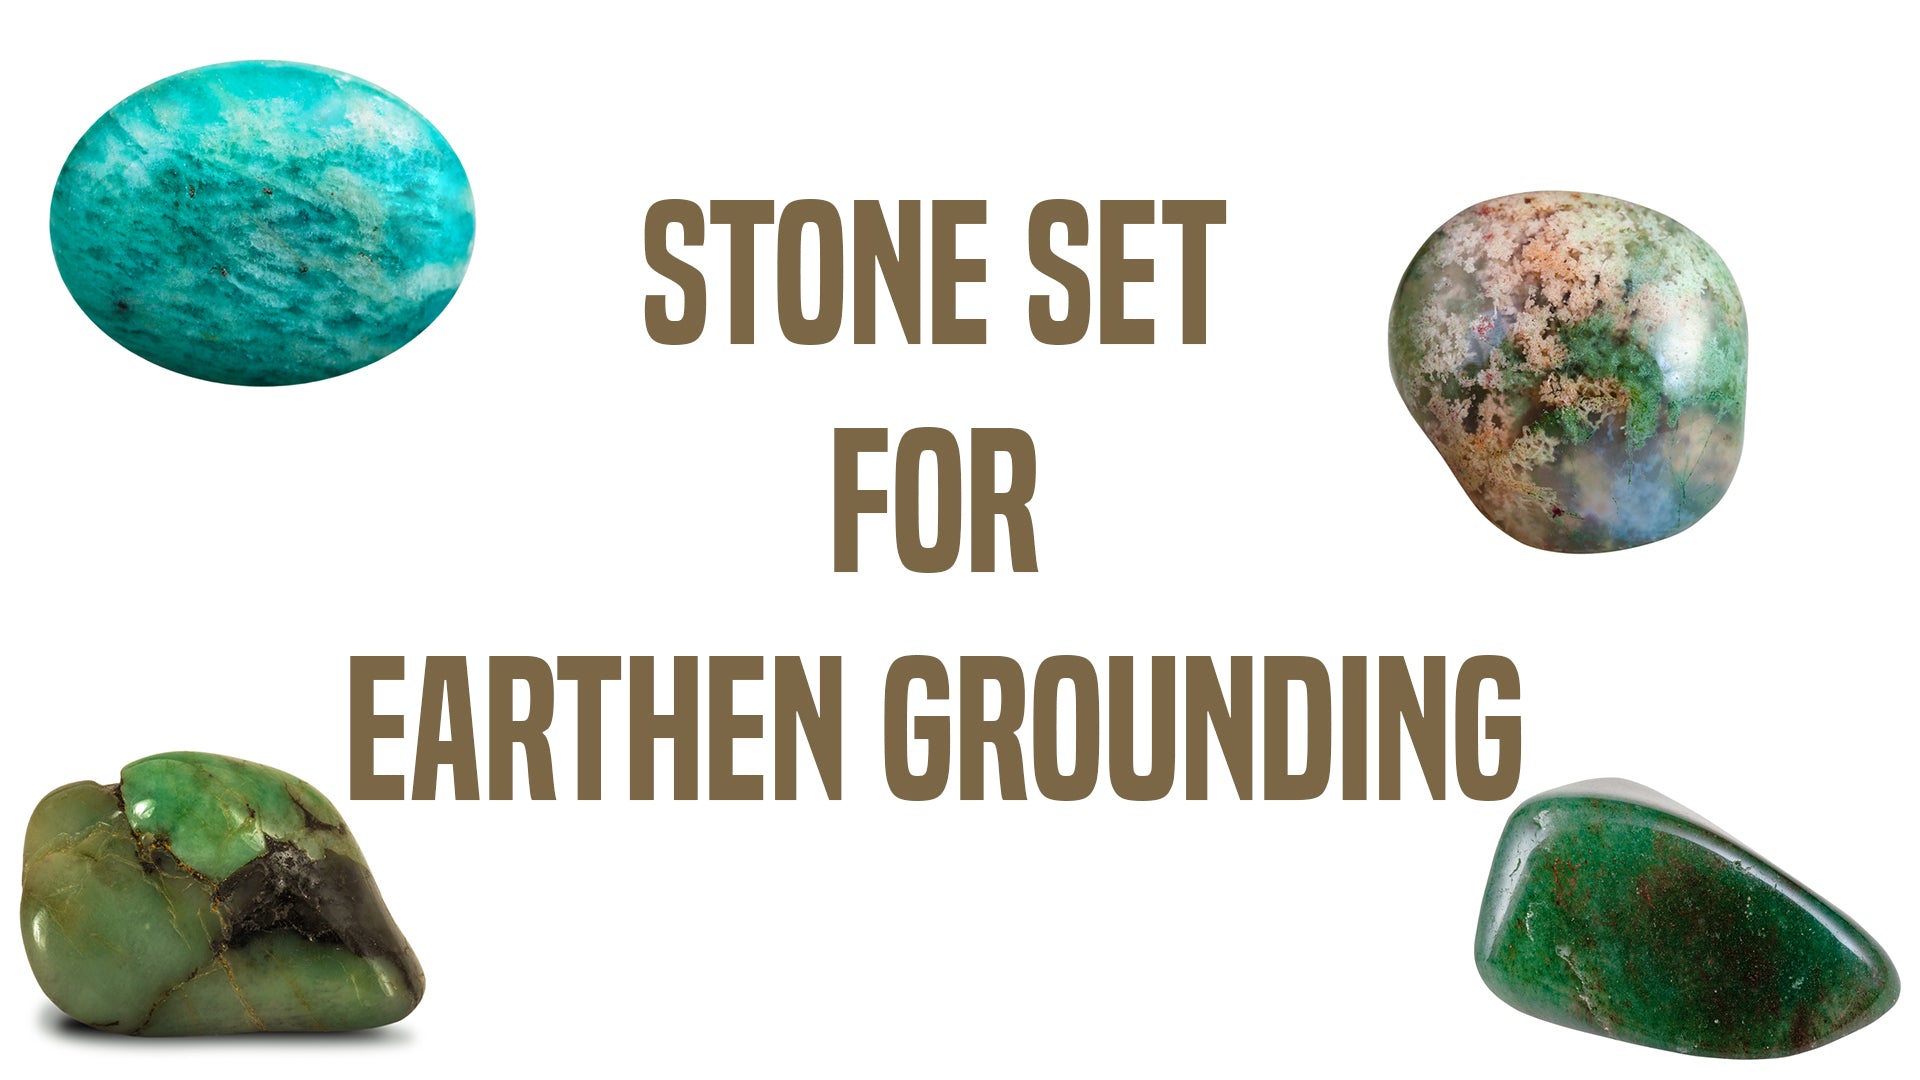 Earthen Grounding Gemstone Pocket Stone Set | Crystal Gemstone Shop.